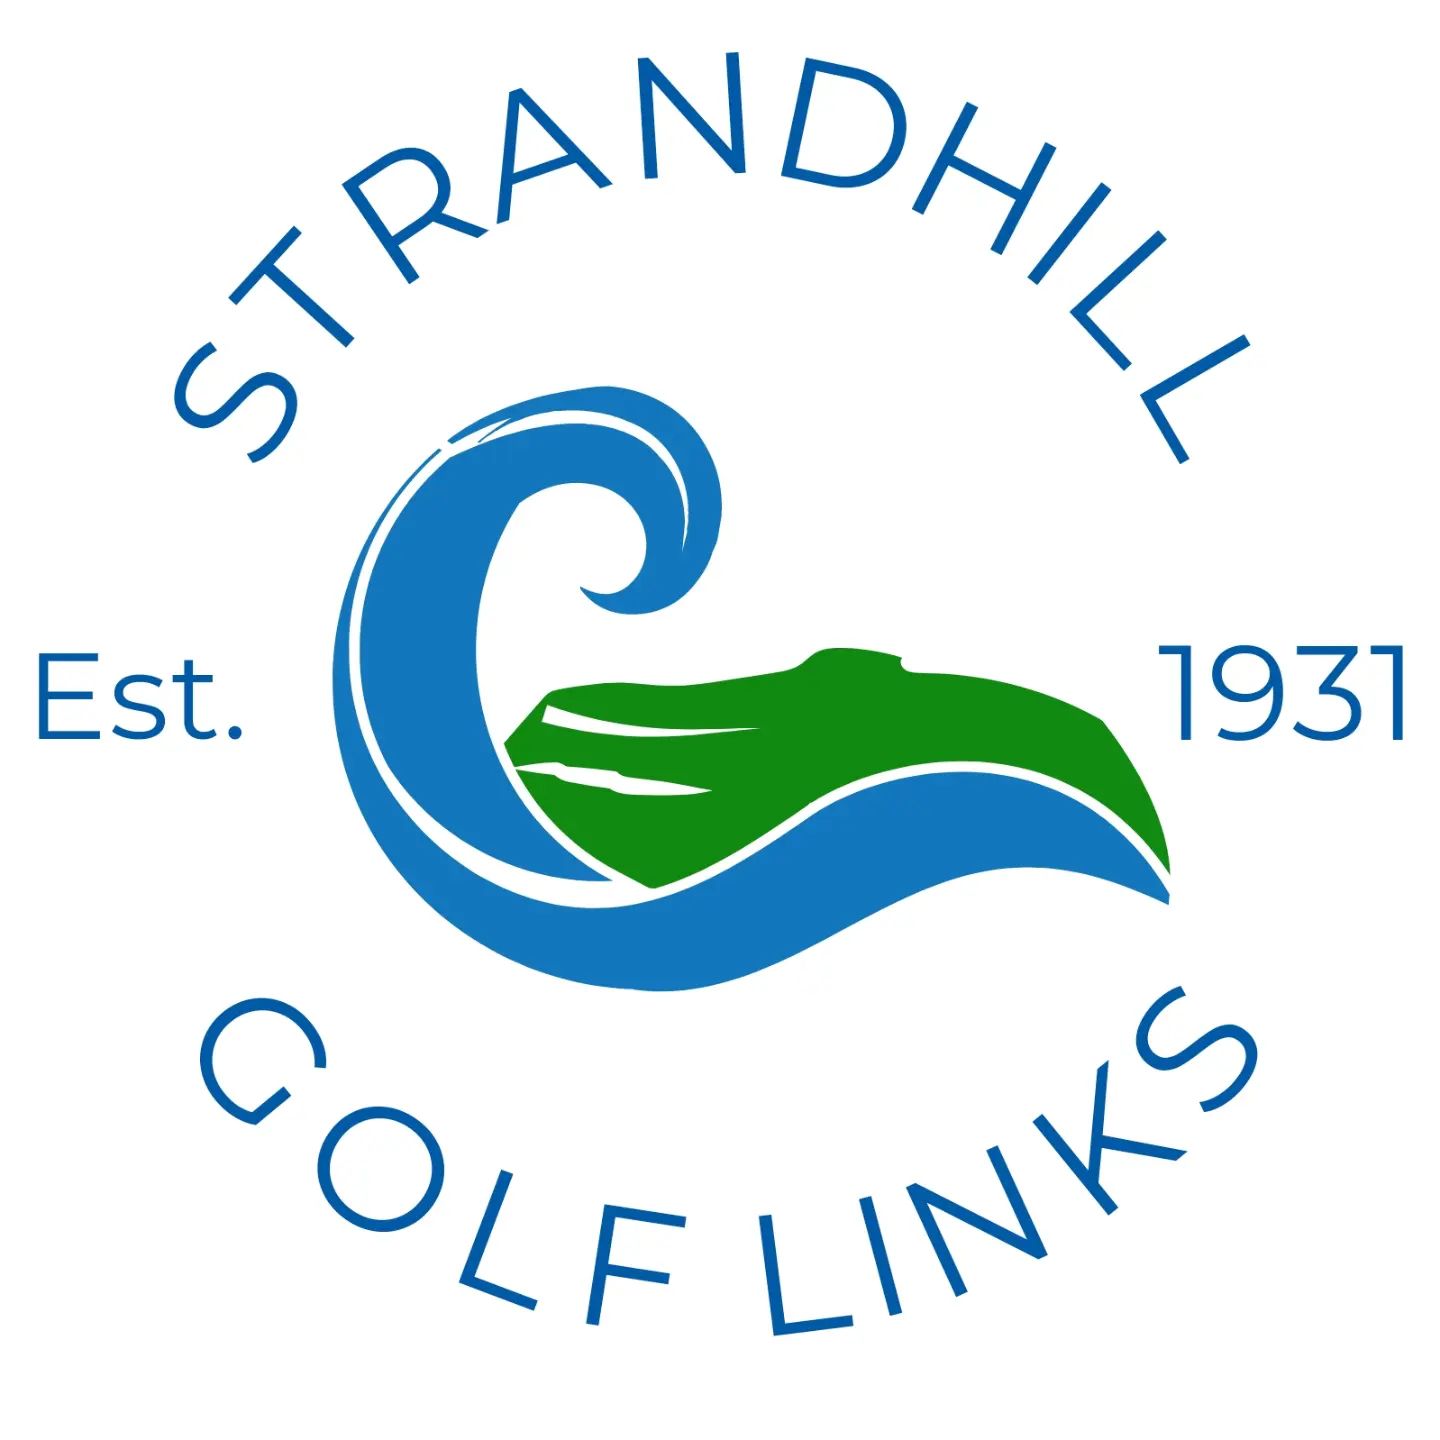 Strandhill Club Crest